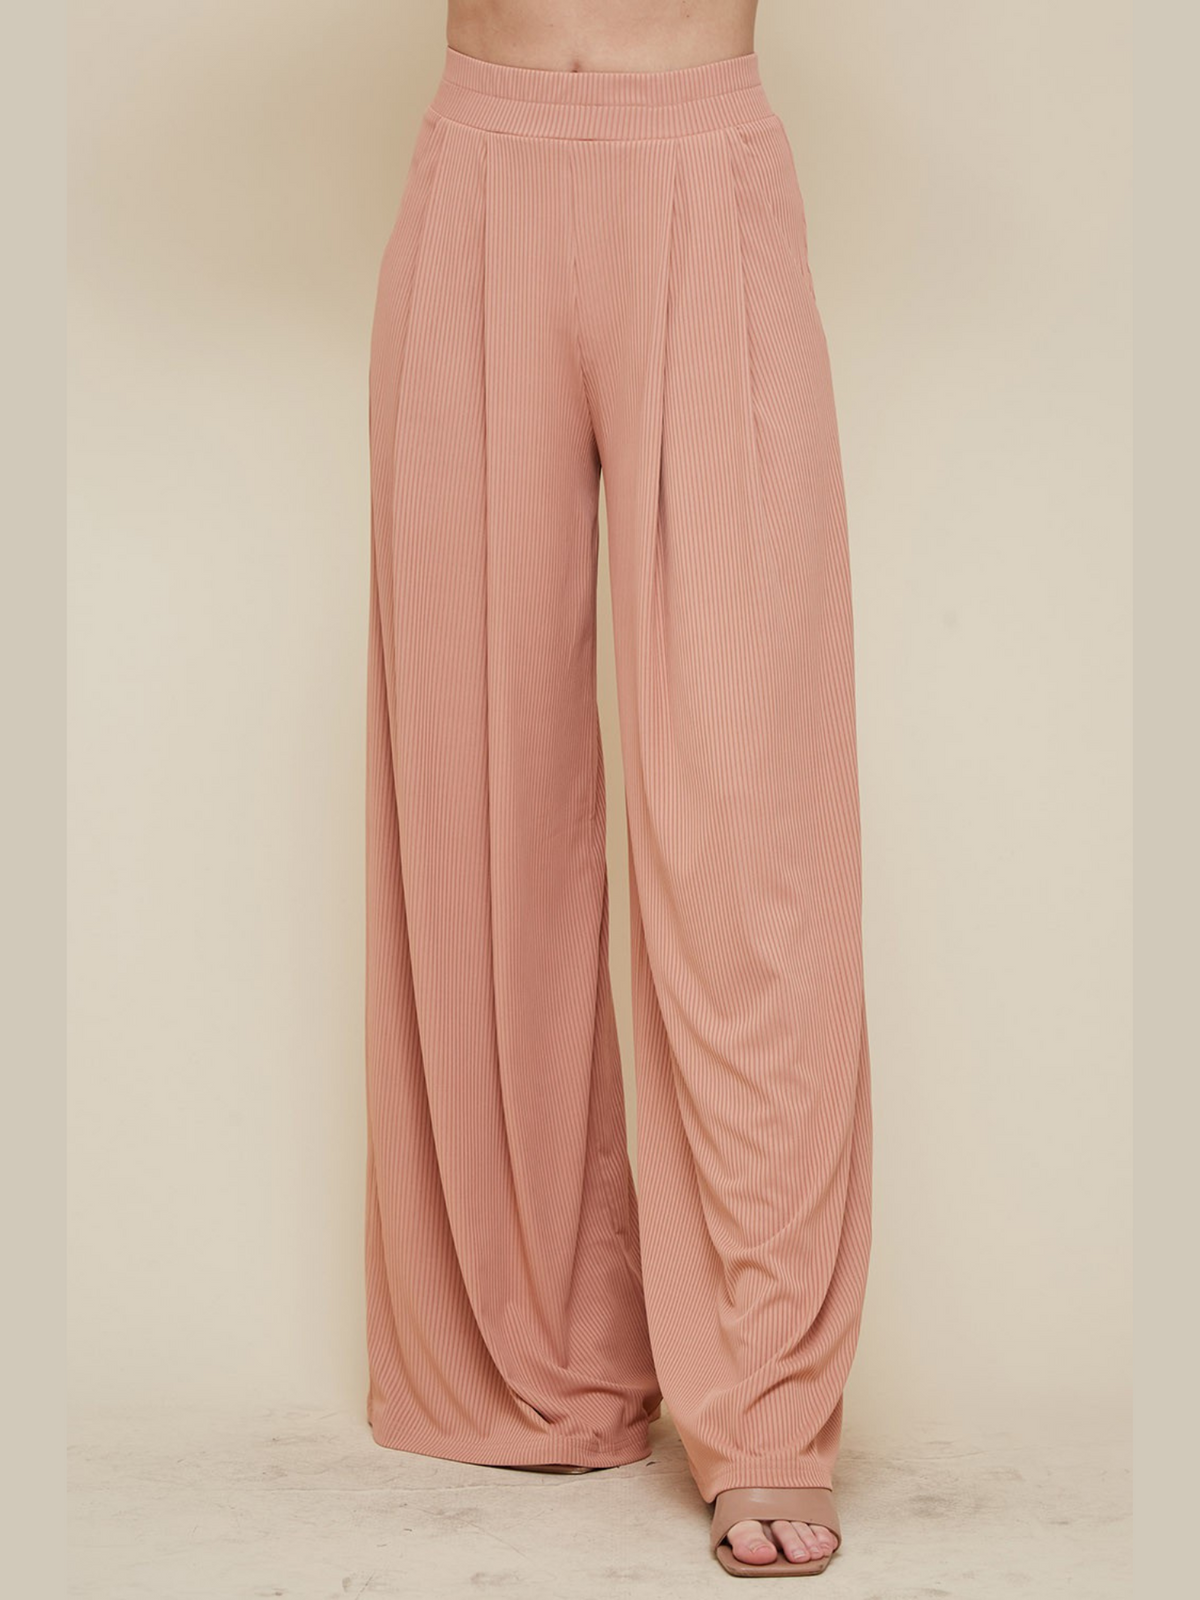 women's mauve pink ribbed knit wide leg soft pants